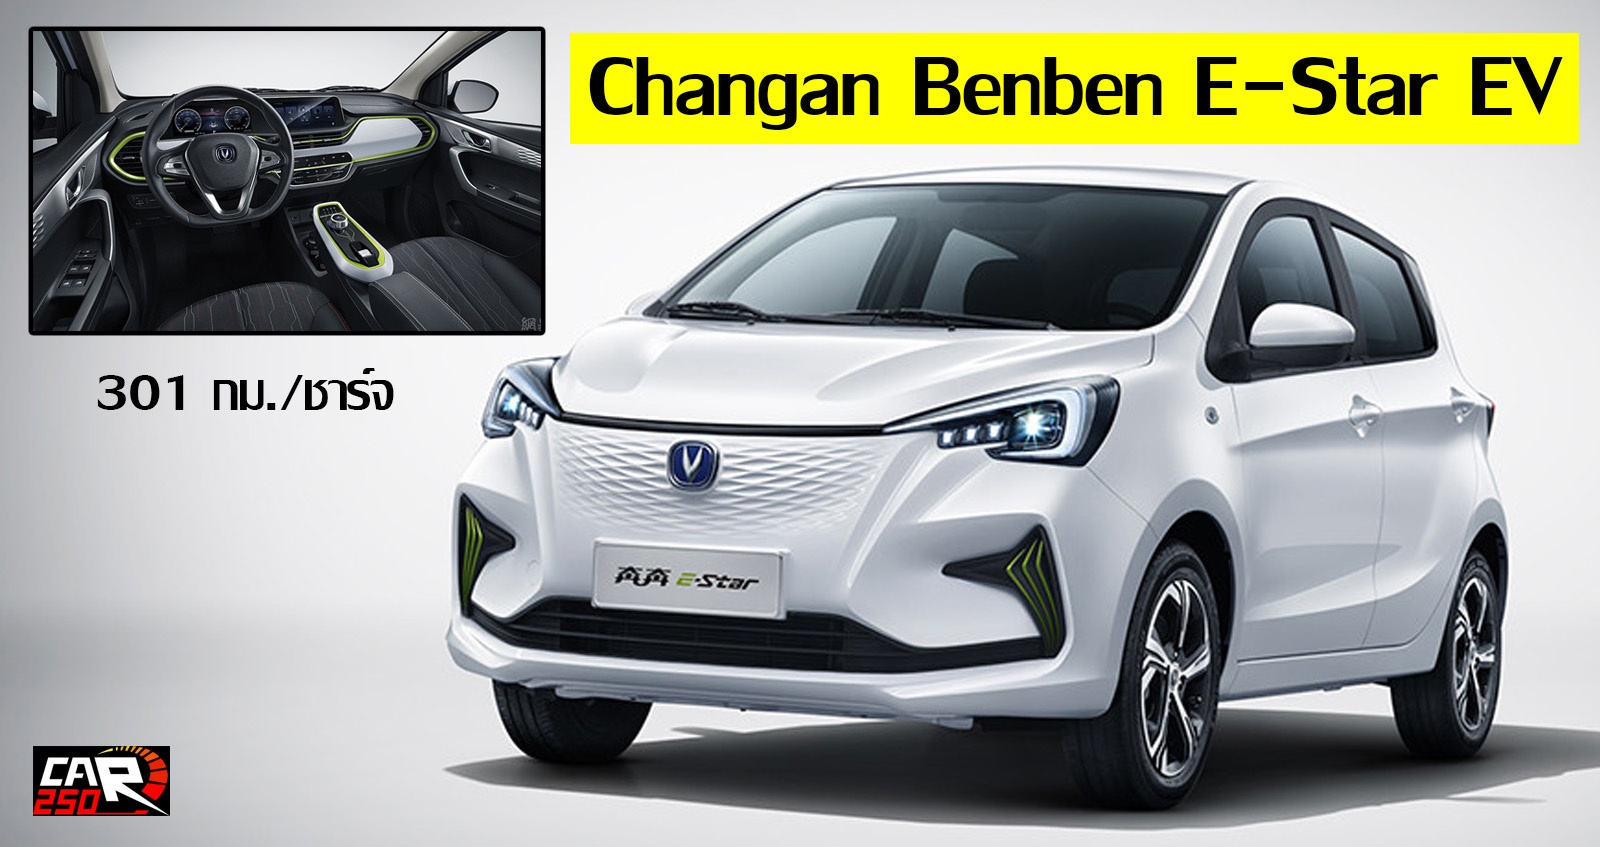 Changan Benben E-Star EV 301 กม./ชาร์จ ราคา 335,000 บาท